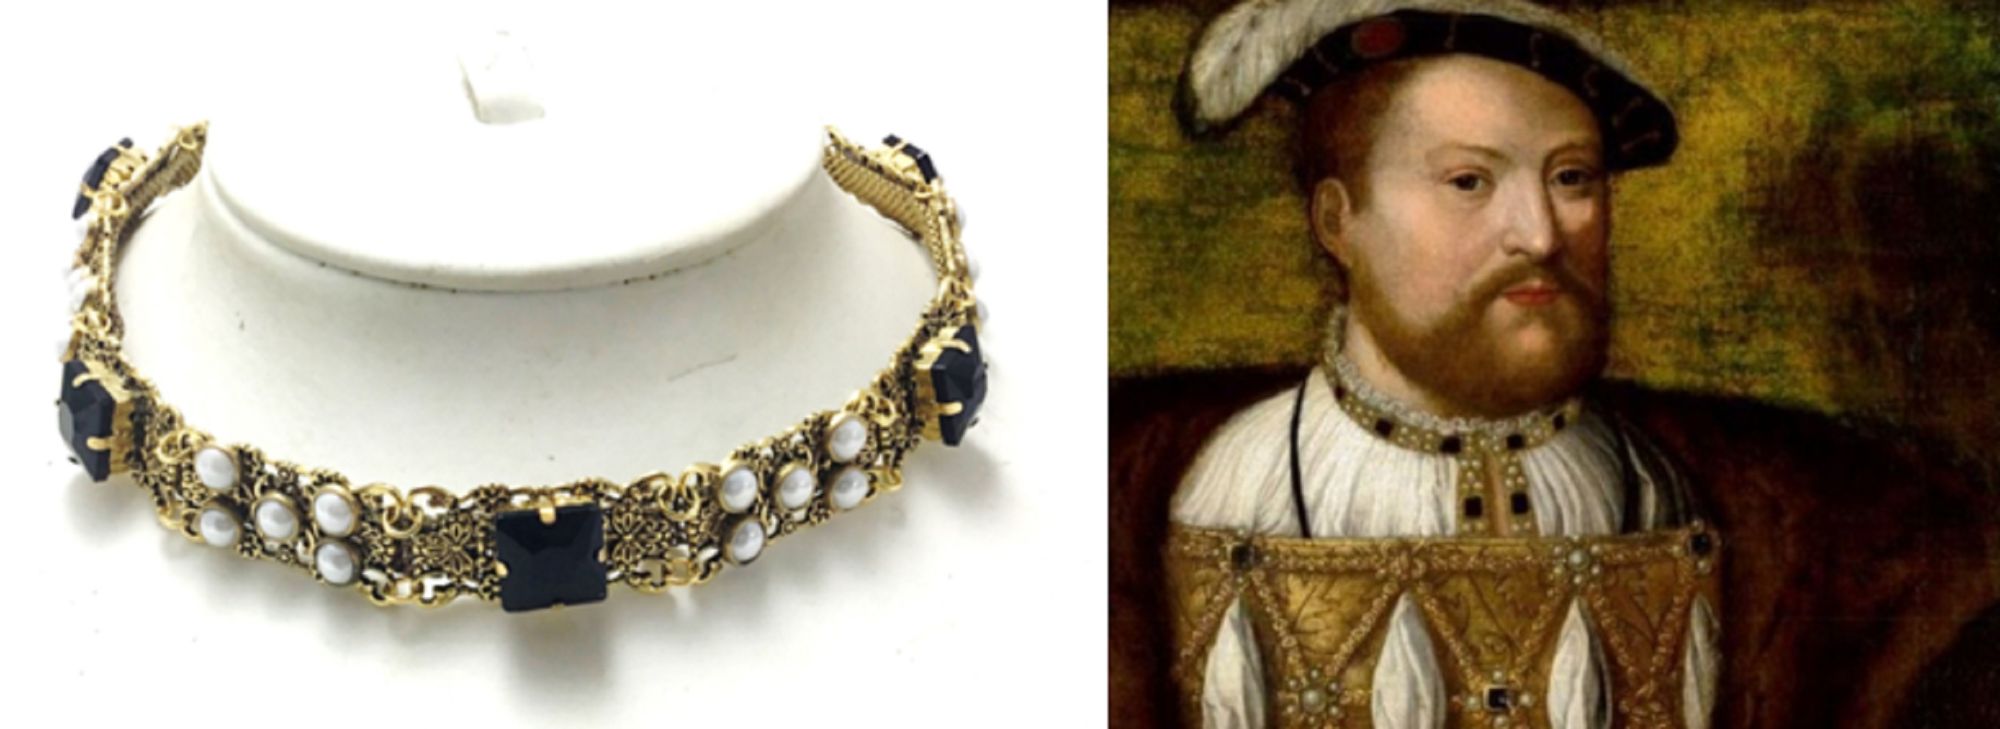 Henry necklace portrait.jpg compare.jpg